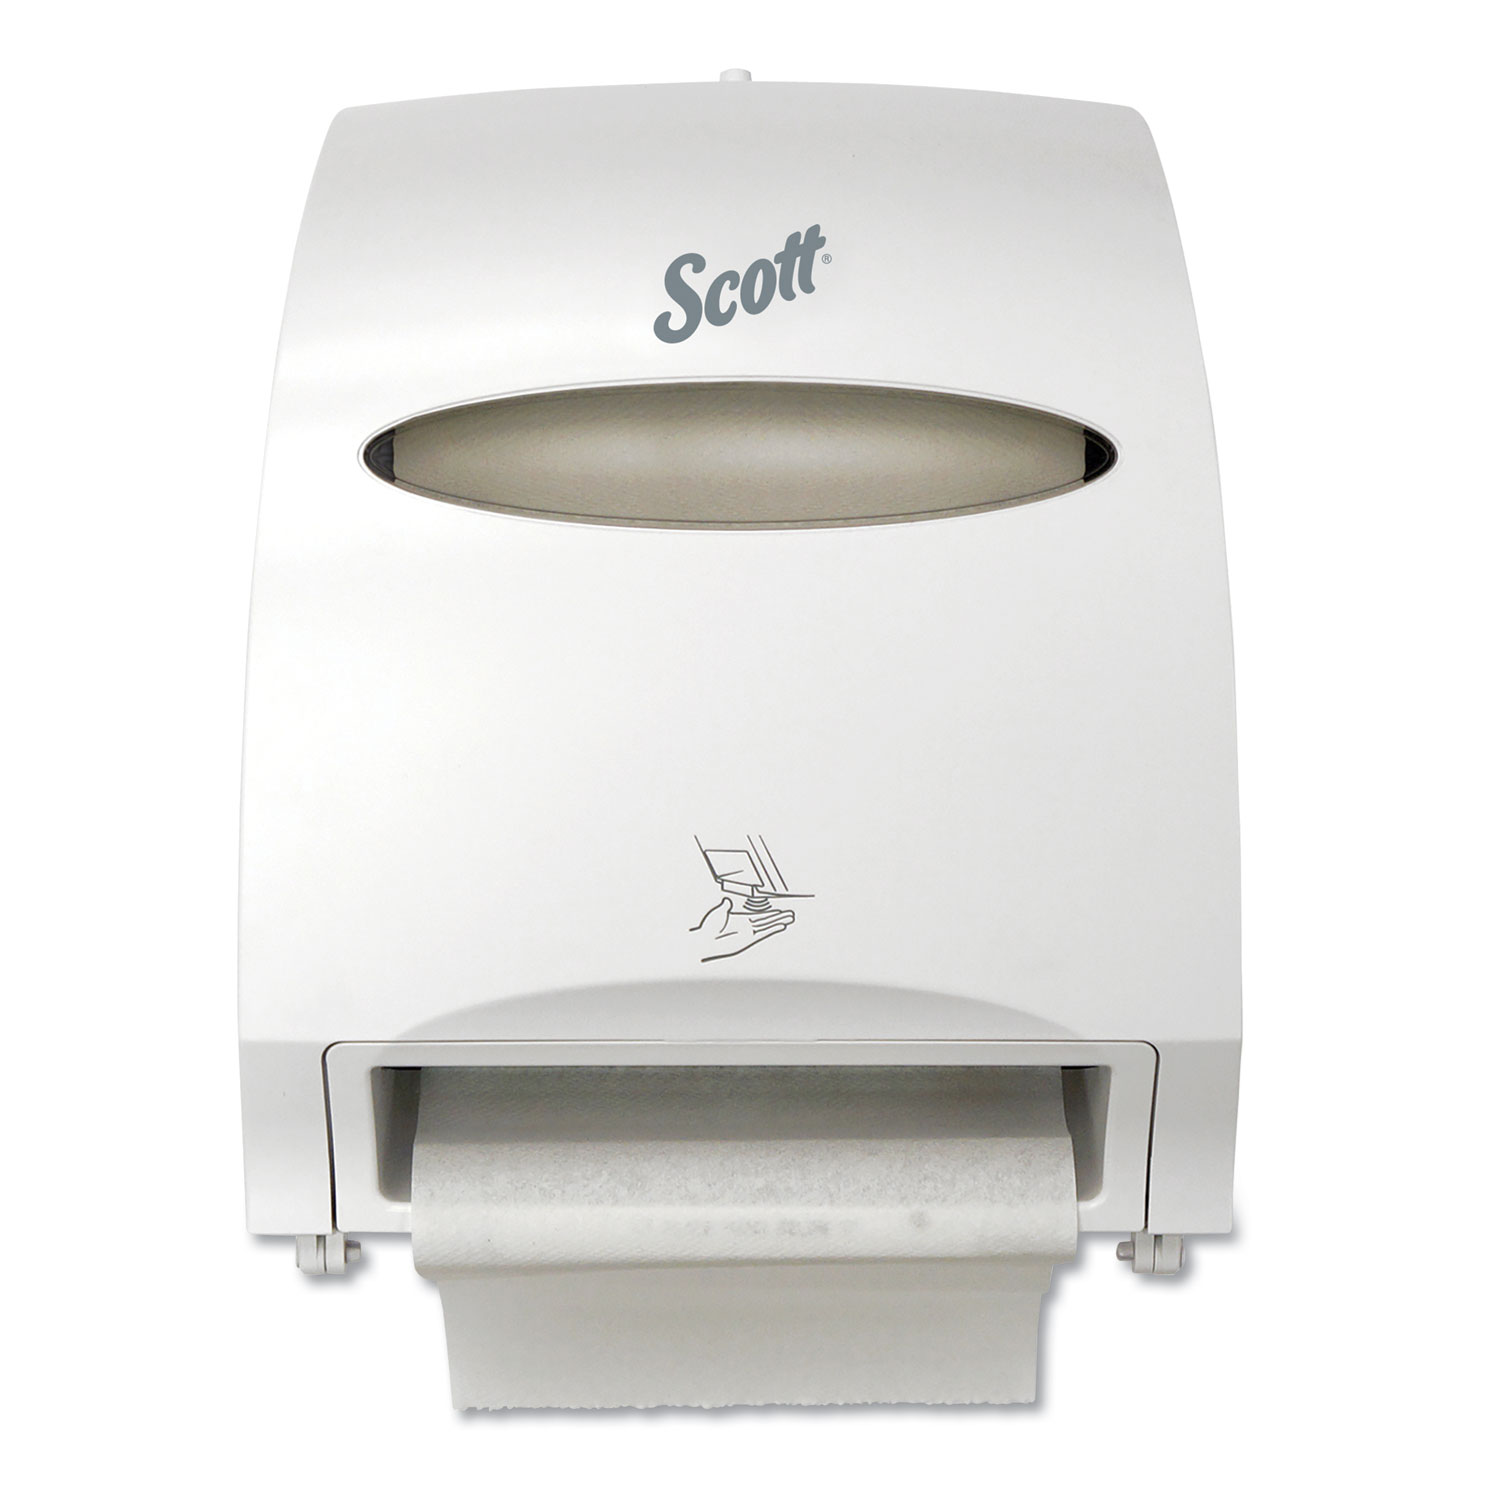  Scott 48858 Essential Electronic Hard Roll Towel Dispenser, 12.7w x 9.572d x 15.761h, White (KCC48858) 